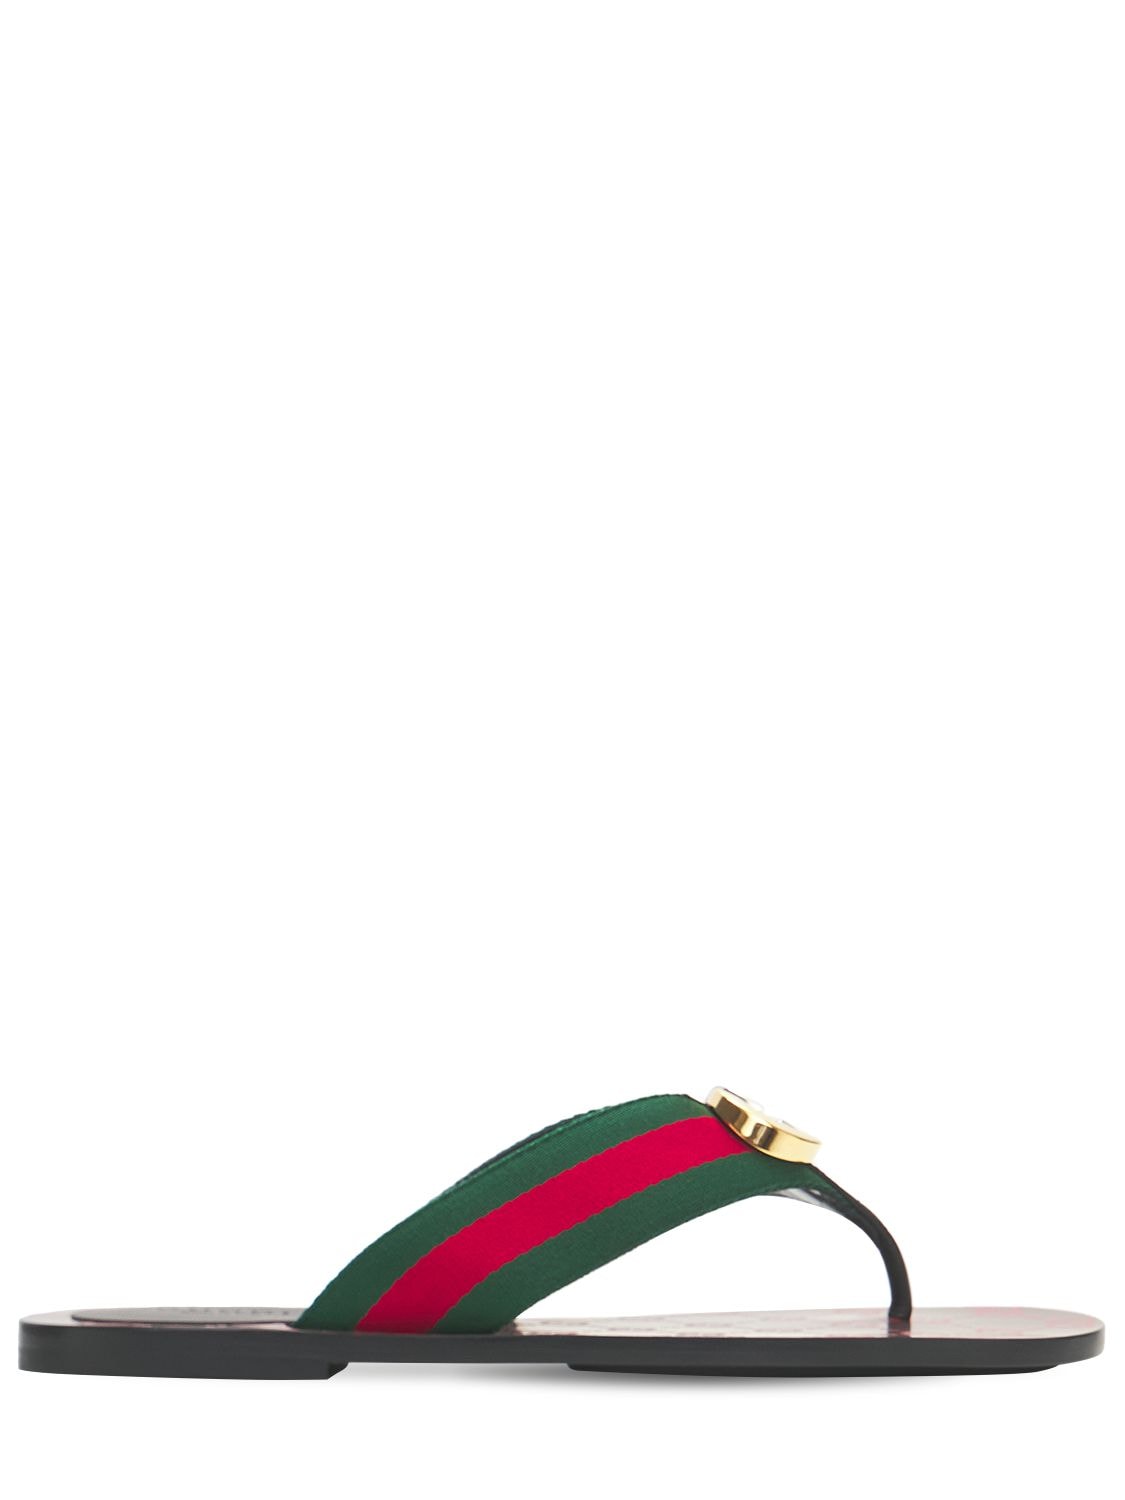 Gucci Kika GG Web Flip Flop in Green/Red/Black